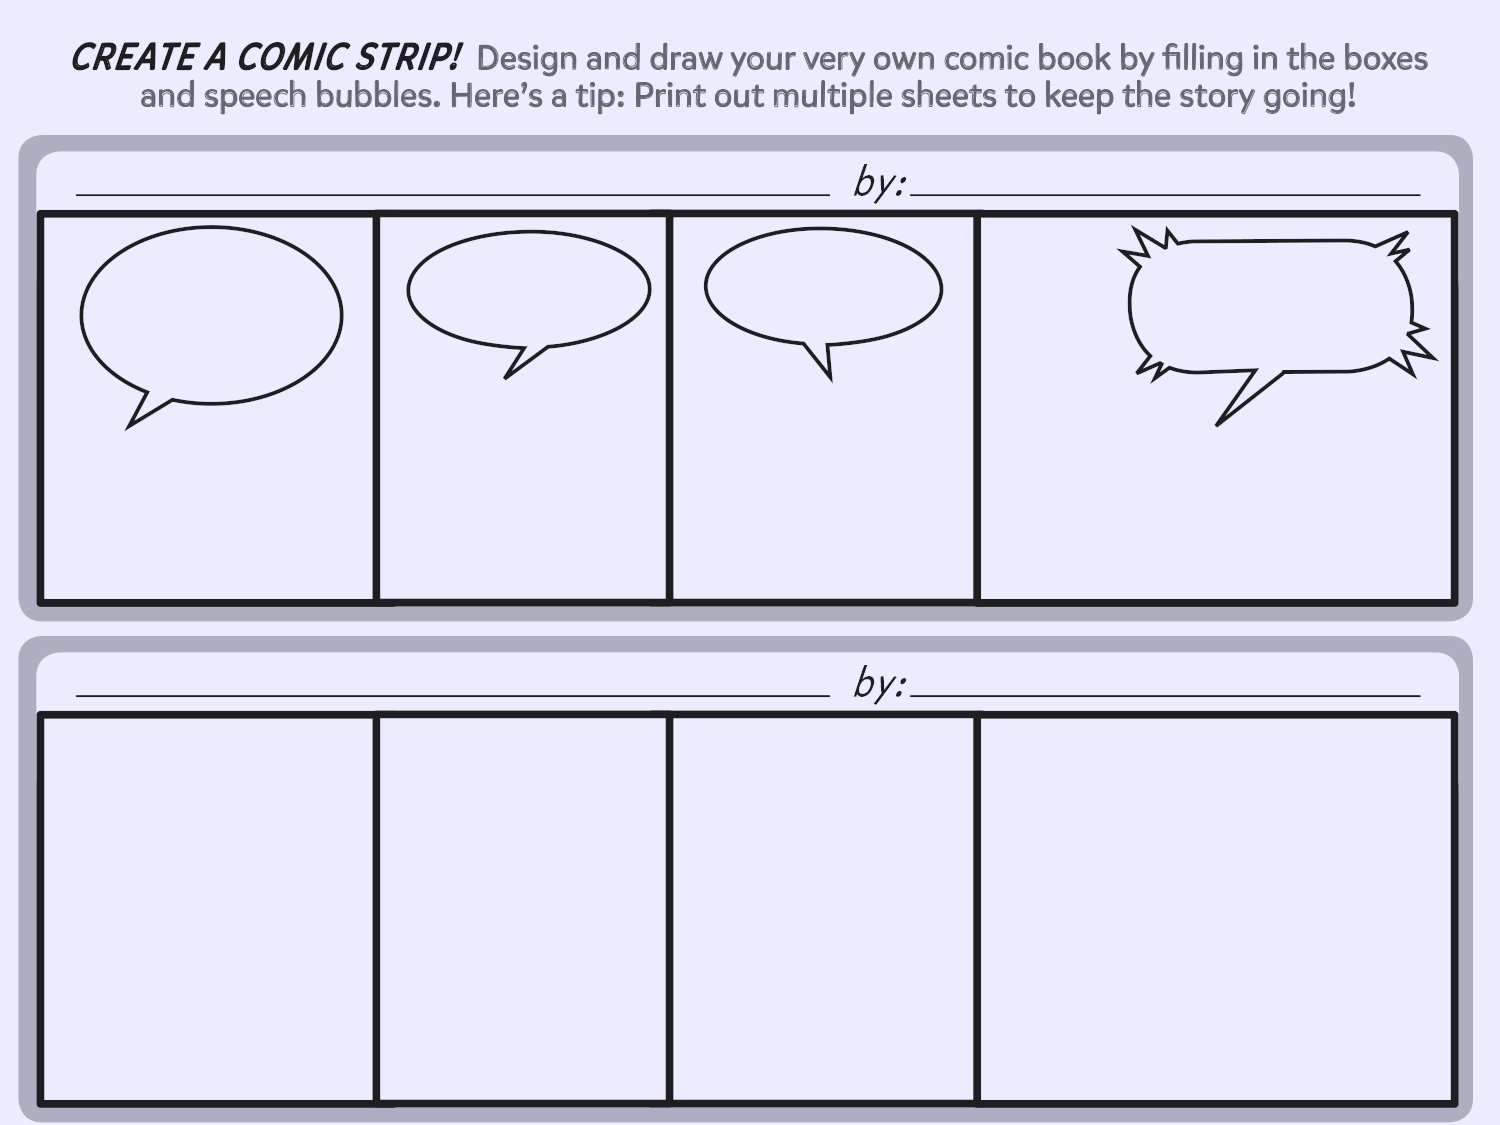 Comic Strip Templates | Comic Book Paper or Graphic Novel Paper templates